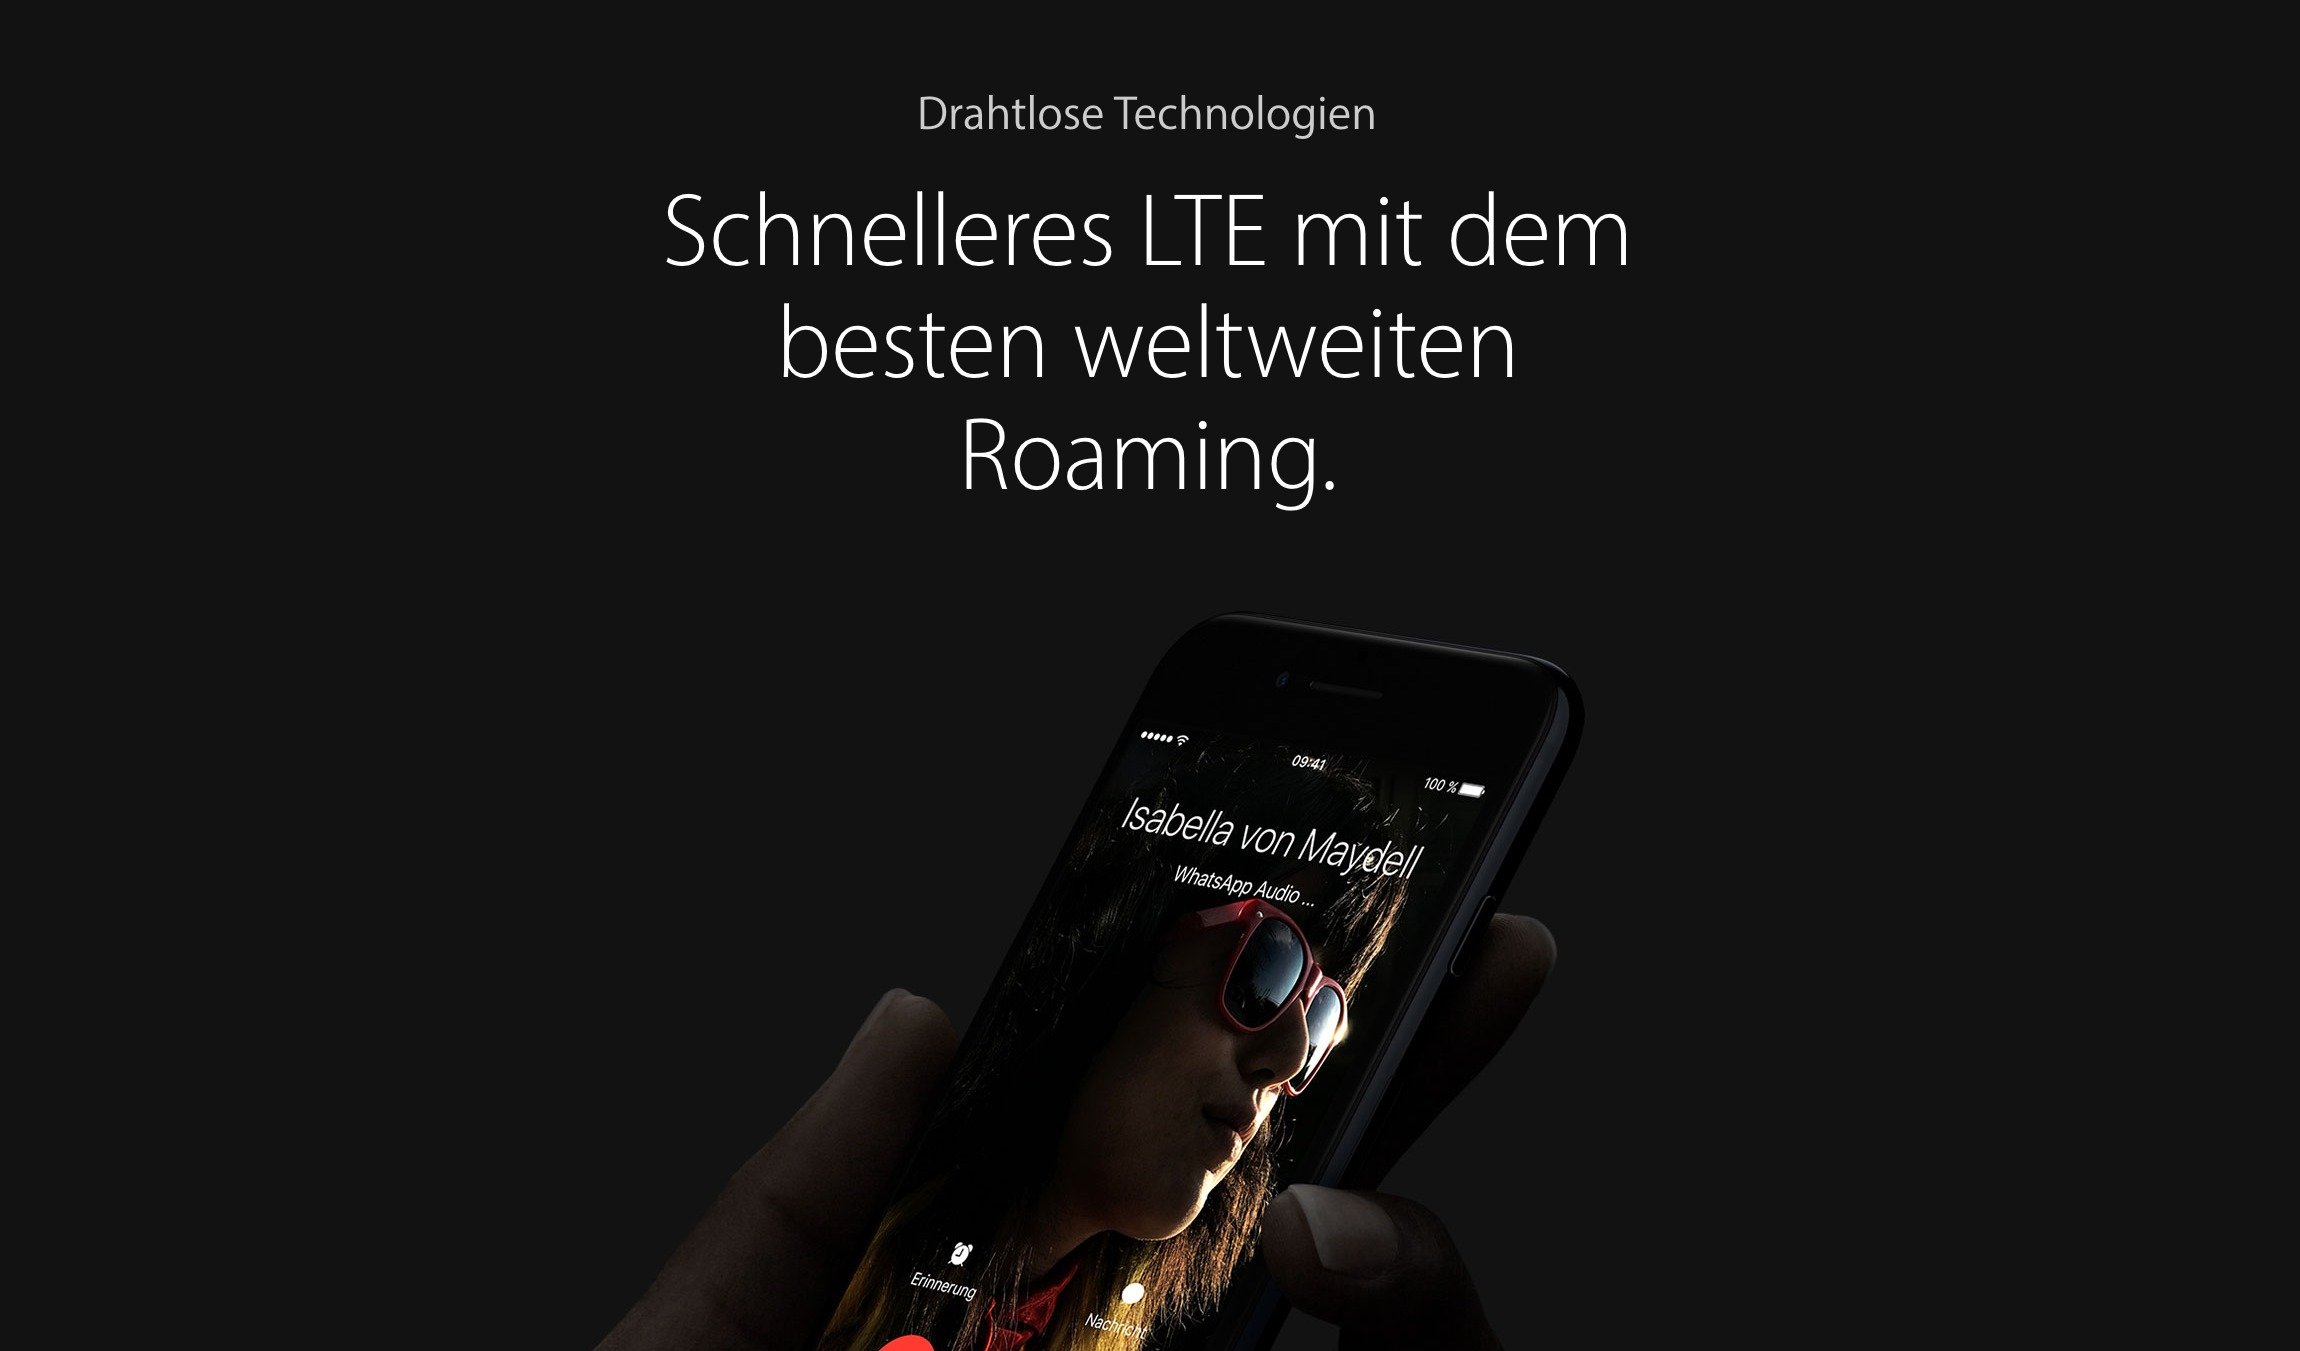 iPhone 7 mit neuem LTE-Chip: LTE-Advanced Cat.9 bis 450 Mbit/s 1